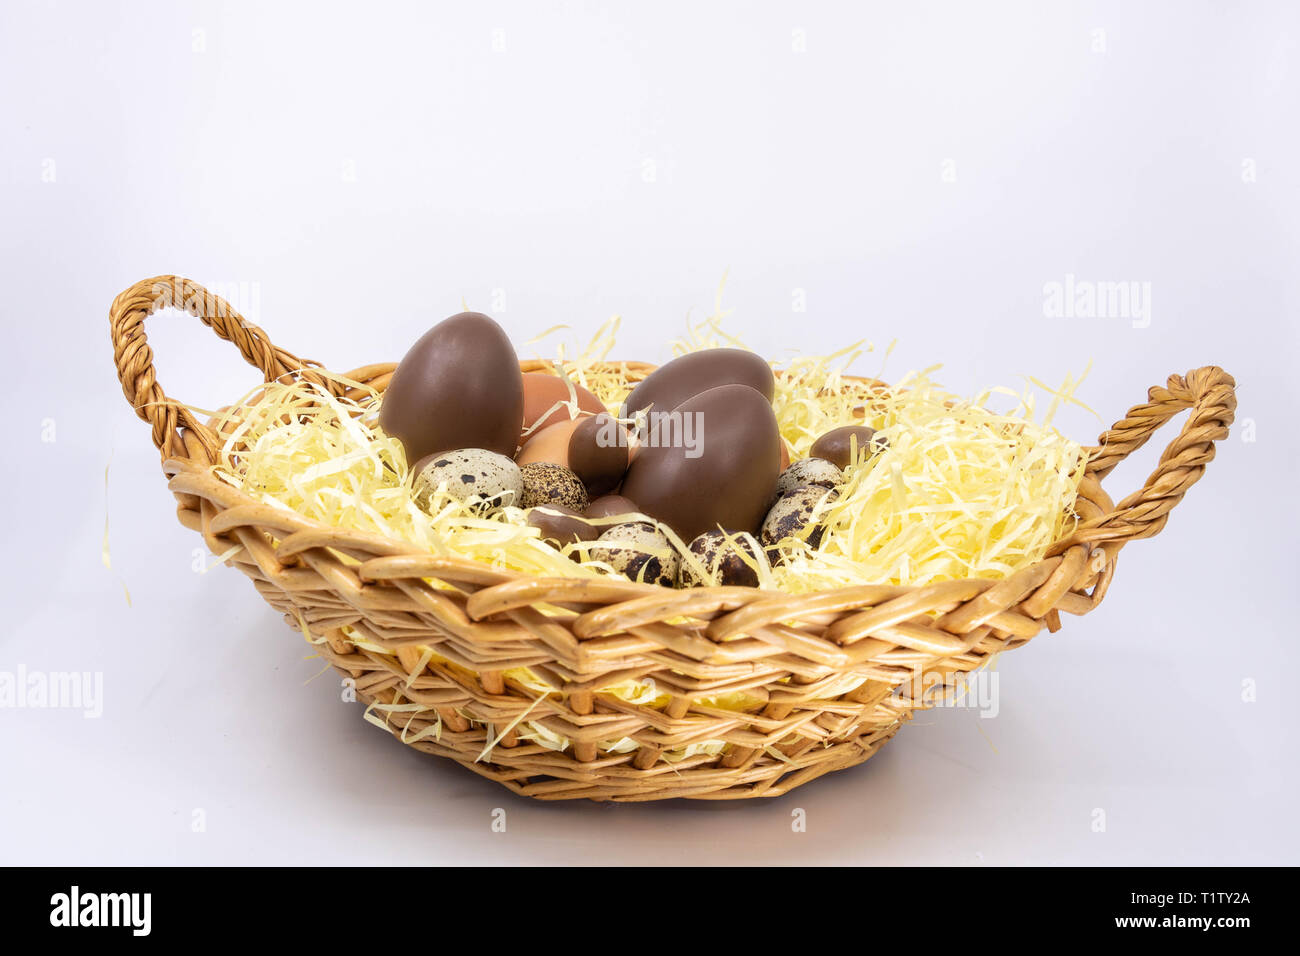 Egg basket for Easter, chicken egg, quail egg and chocolate egg Stock Photo